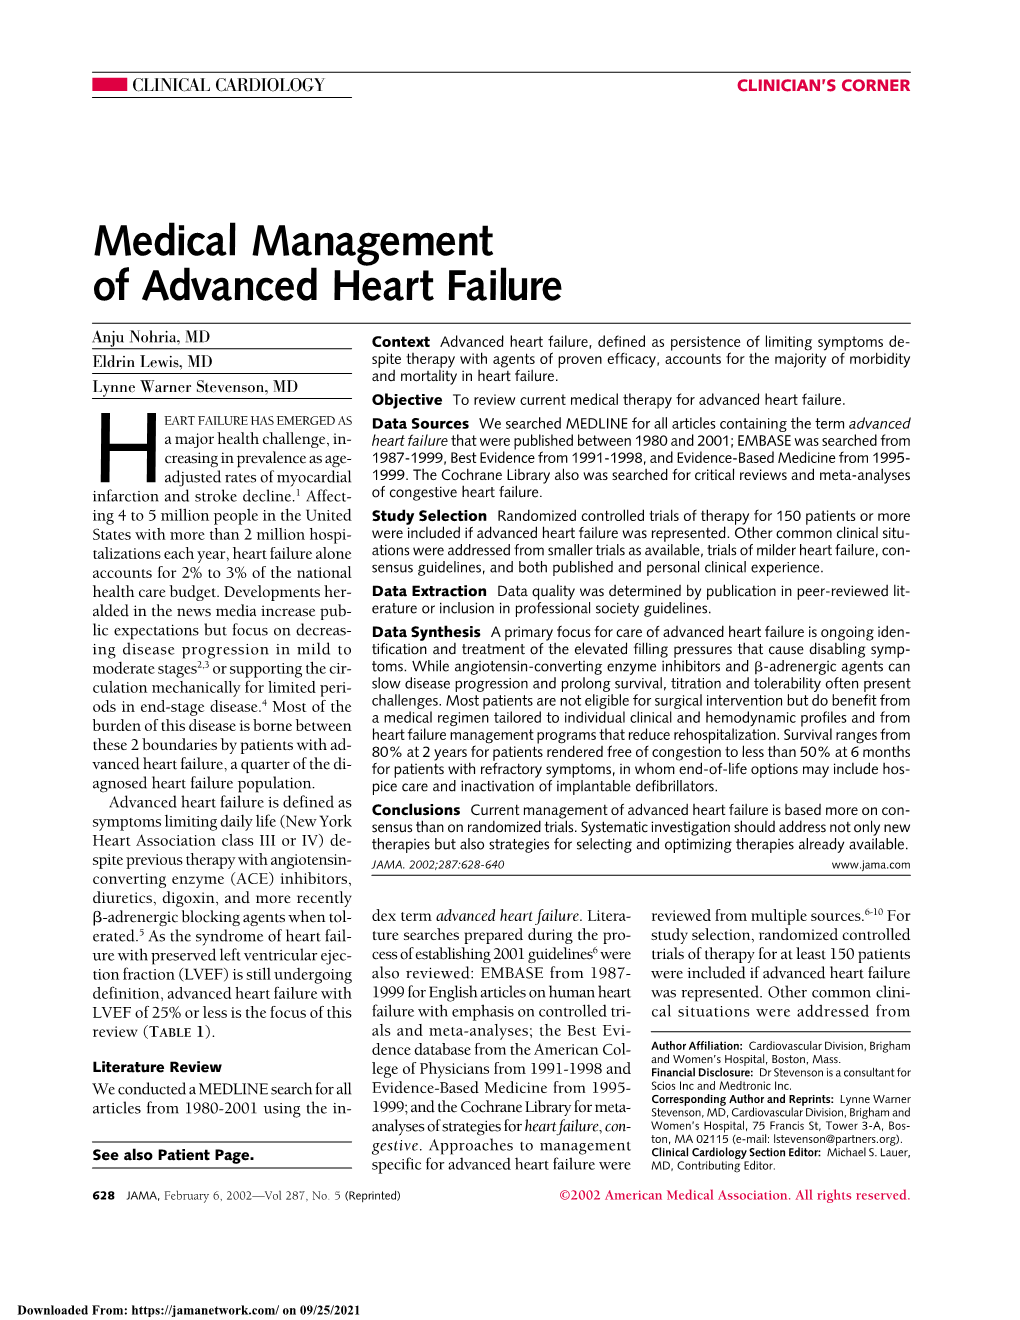 Medical Management of Advanced Heart Failure